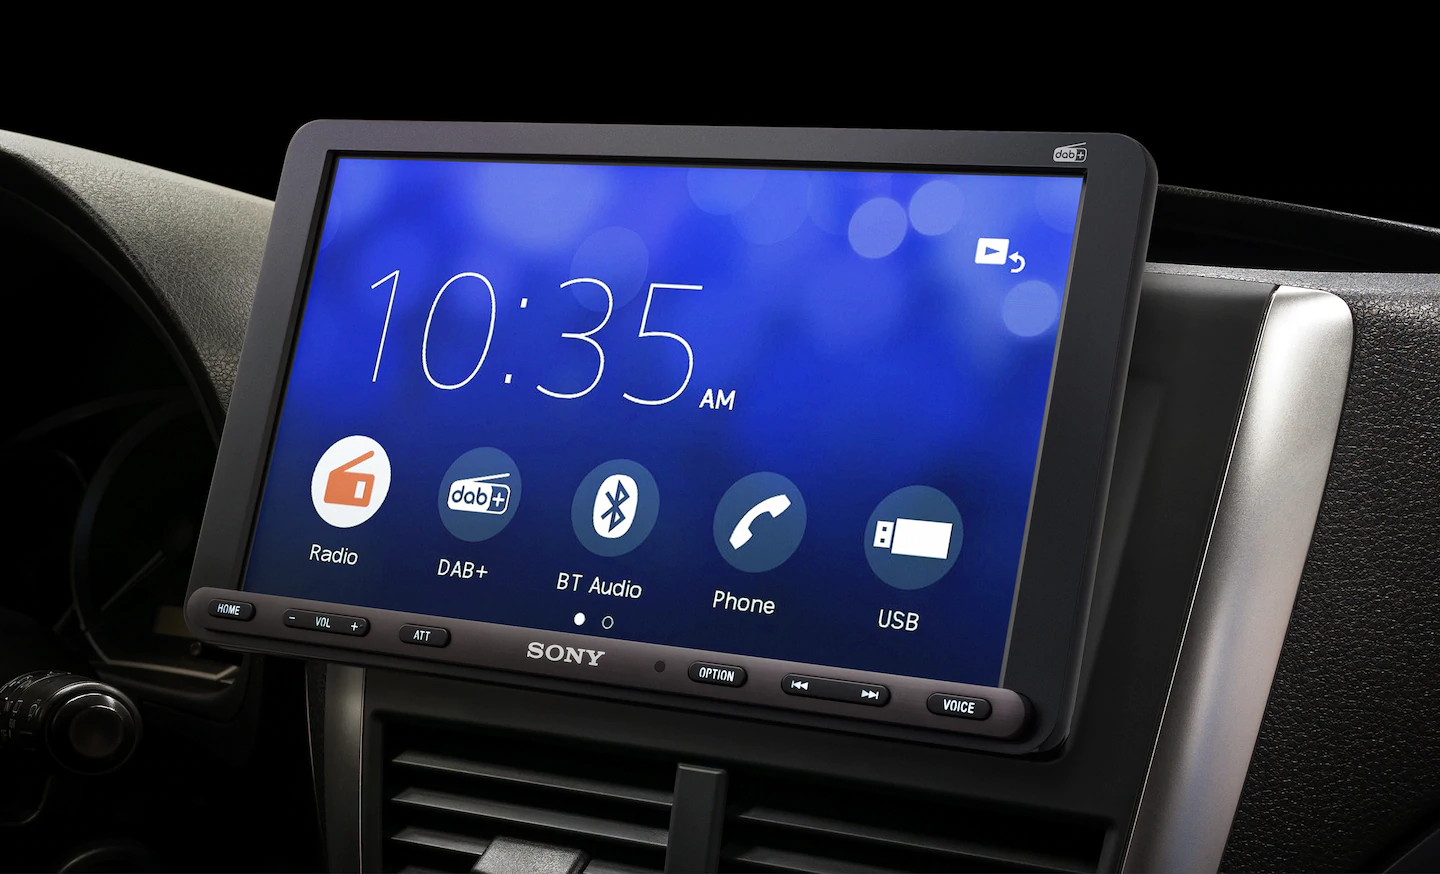 NHOPEEW Single Din Autoradio mit Carplay und Auto Rückspiegel 7 Zoll kapazitiver Touchscreen MP5 Radio Unterstützung Bluetooth/Sat Navi/FM Radio/AUX/USB